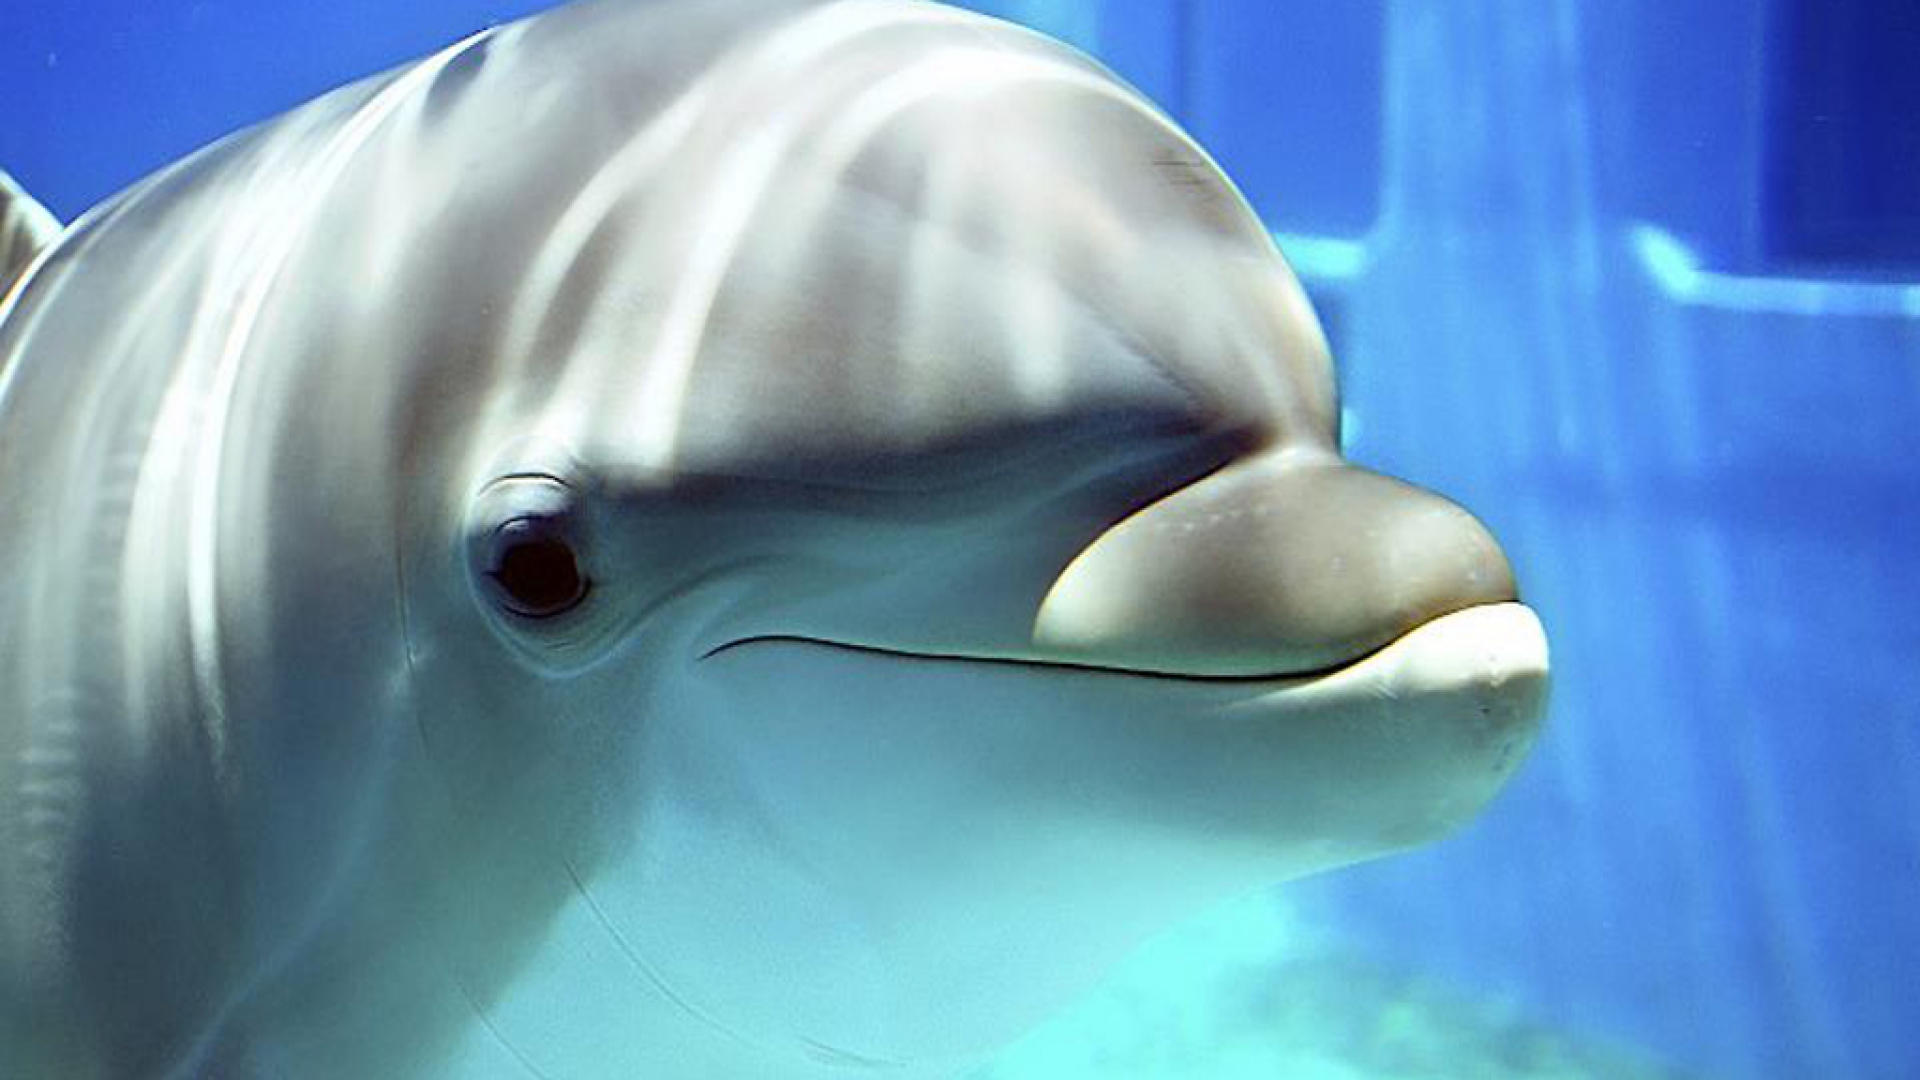 Dolphin Wallpaper HD